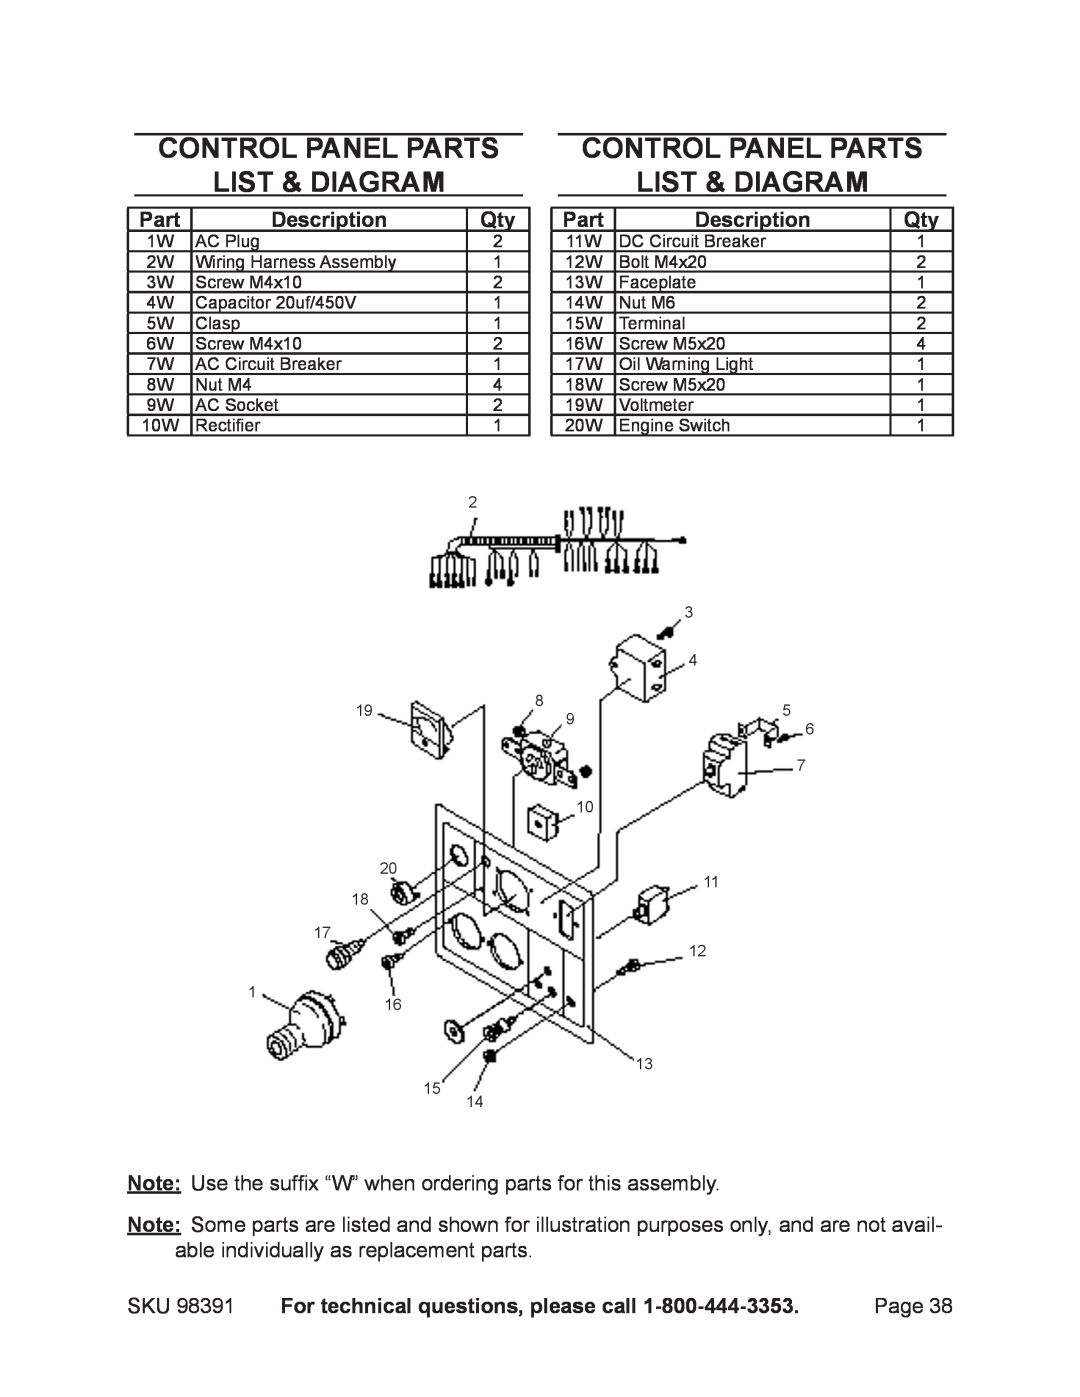 Chicago Electric 98391 manual Control panel PARTS LIST & diagram, Part, Description, For technical questions, please call 